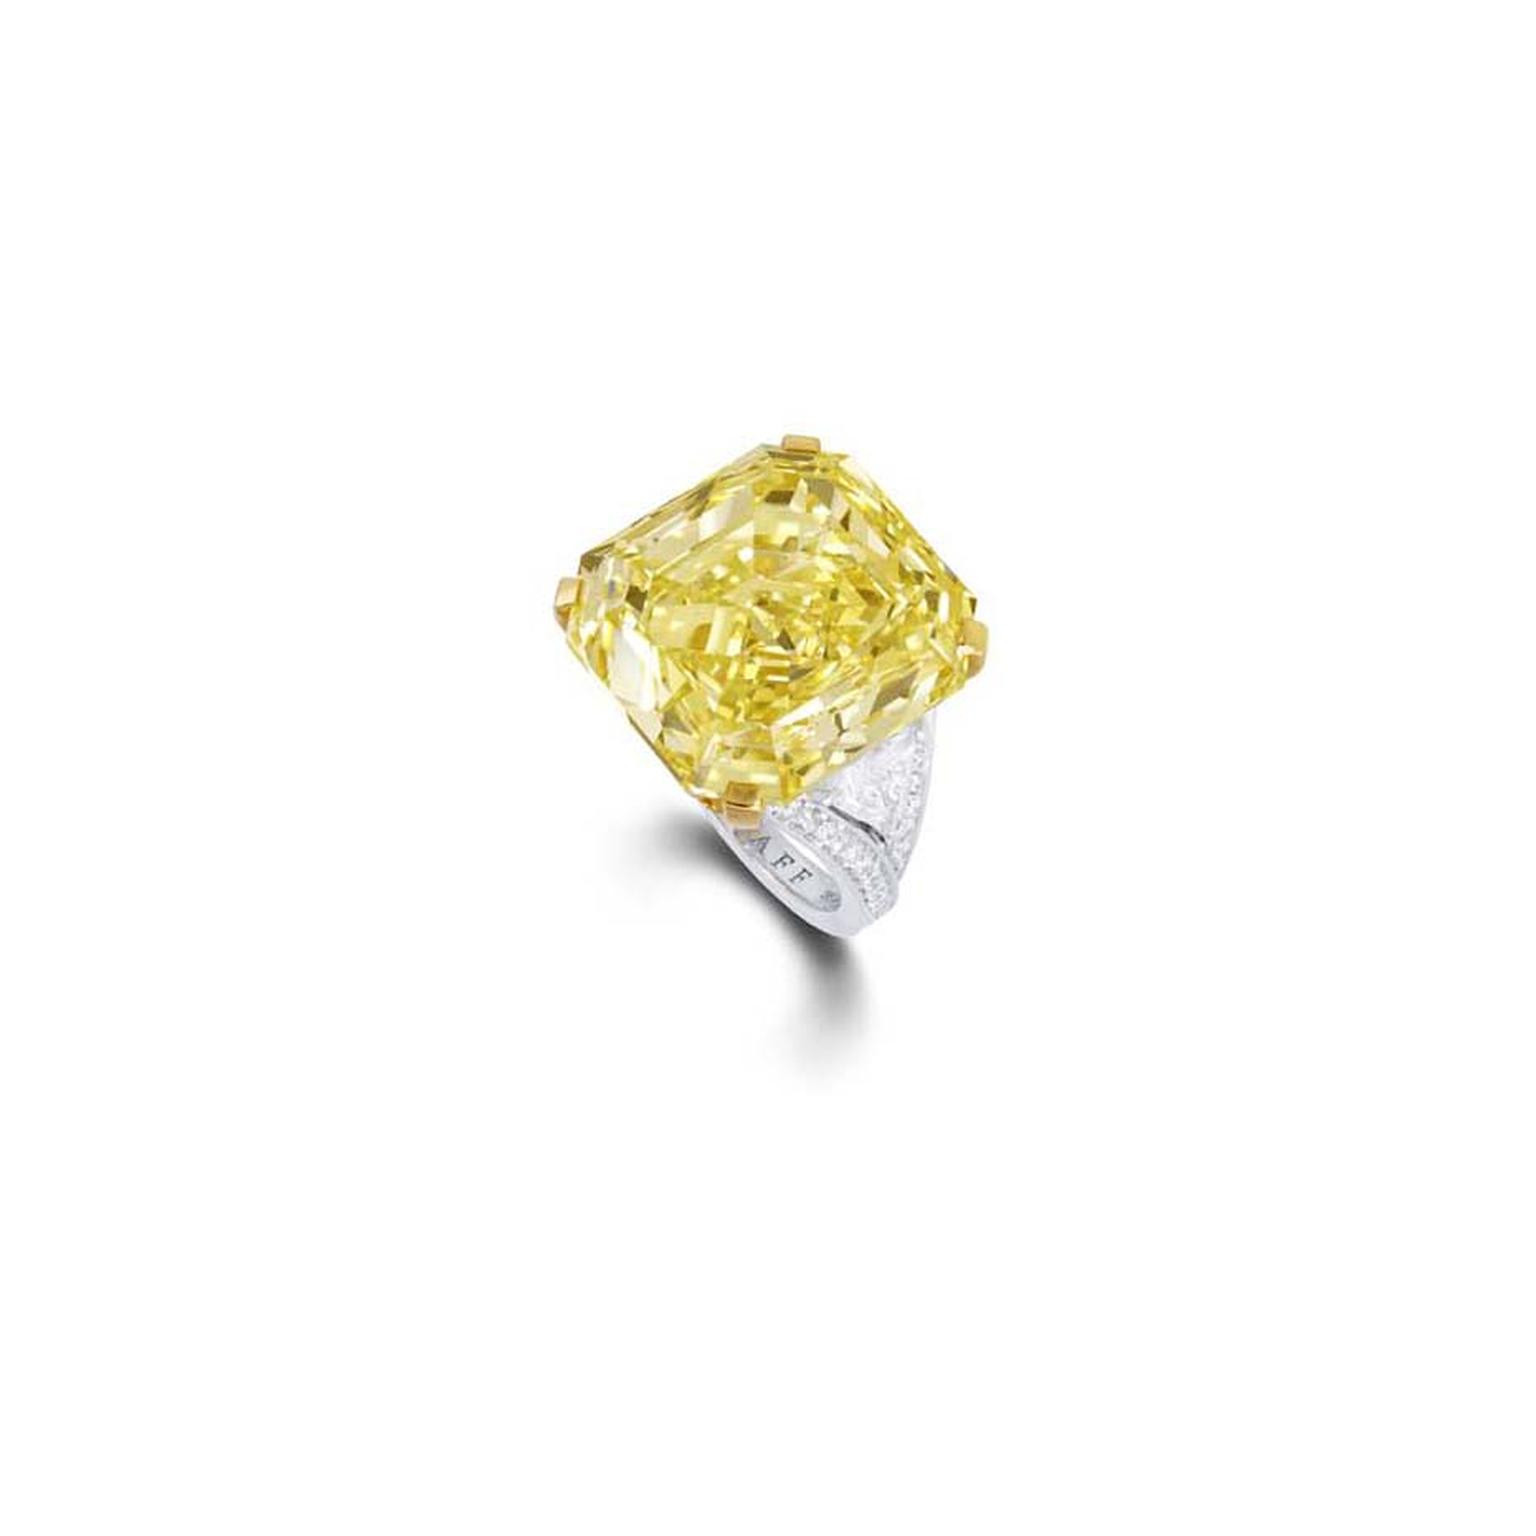 Graff 36.23ct fancy intense emerald cut yellow diamond ring